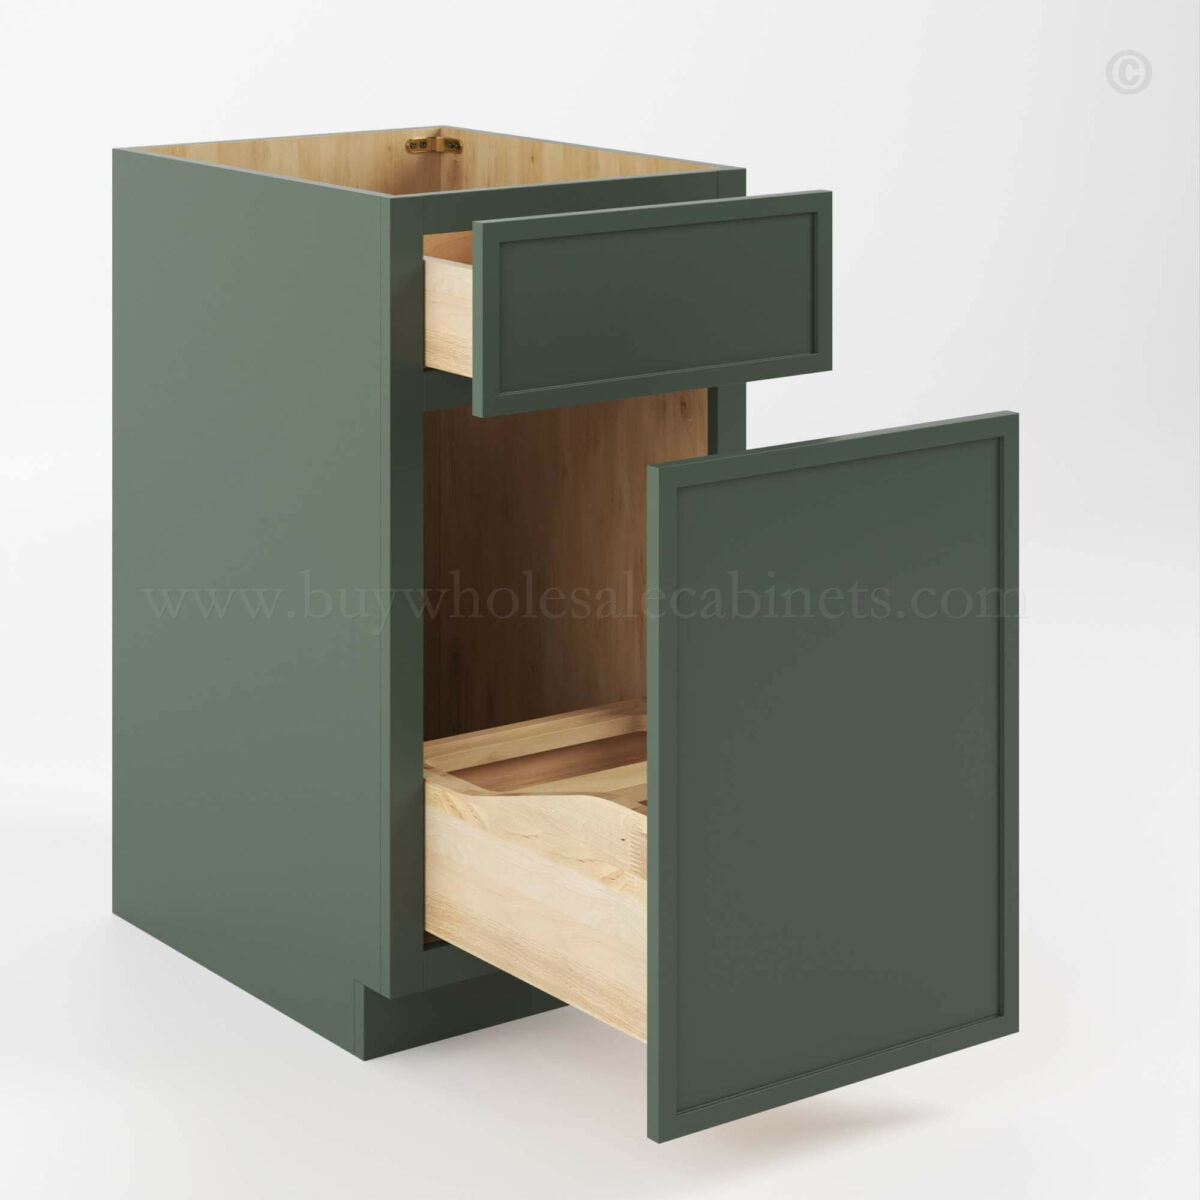 Slim Shaker Green Base Trash Cabinet, rta cabinets, wholesale cabinets